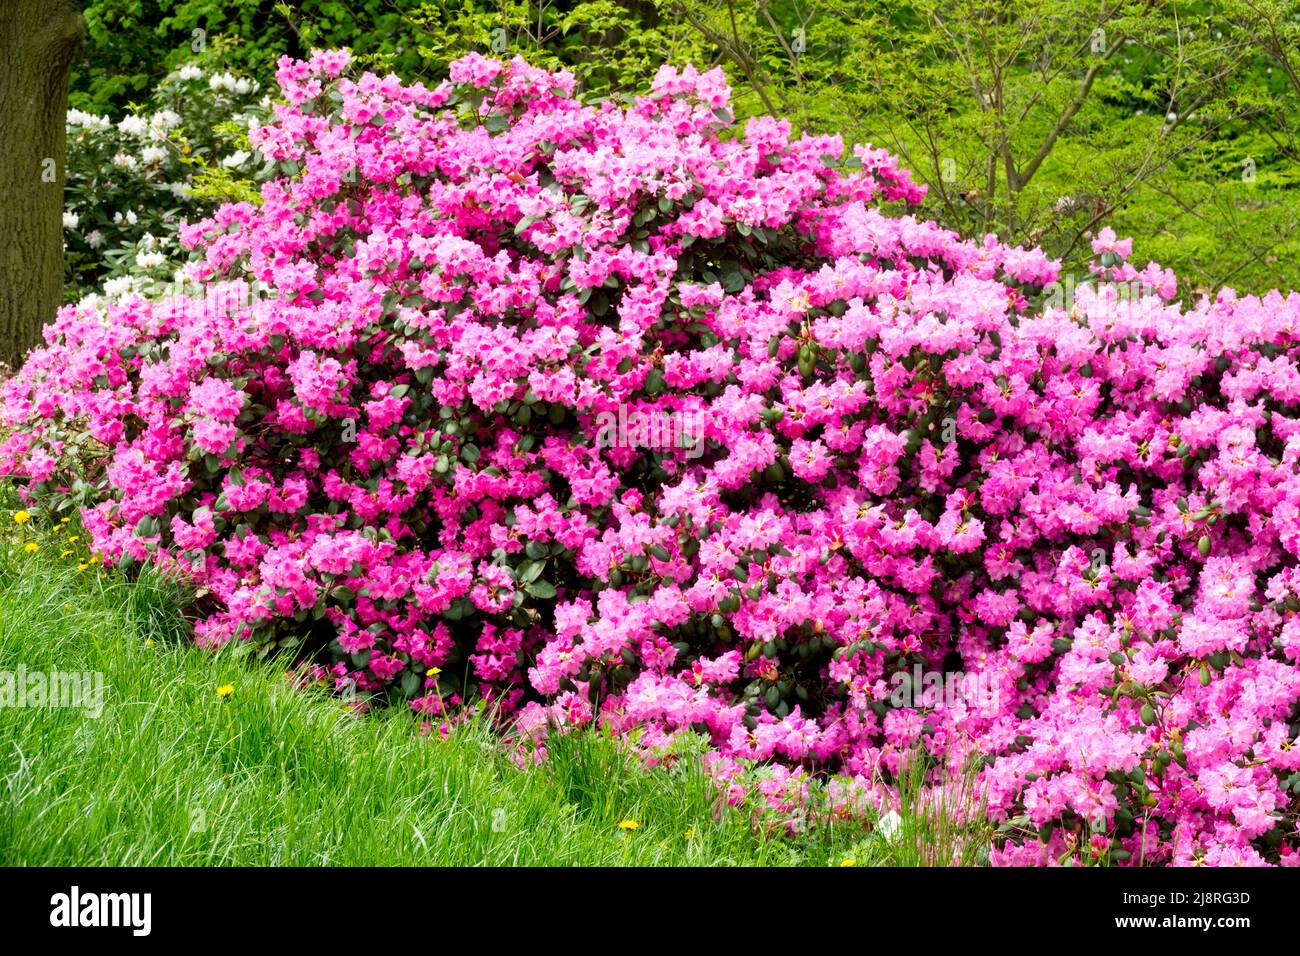 Rhododendron 'Vater Böhlje' pink flowering shrub, full blooms Stock Photo